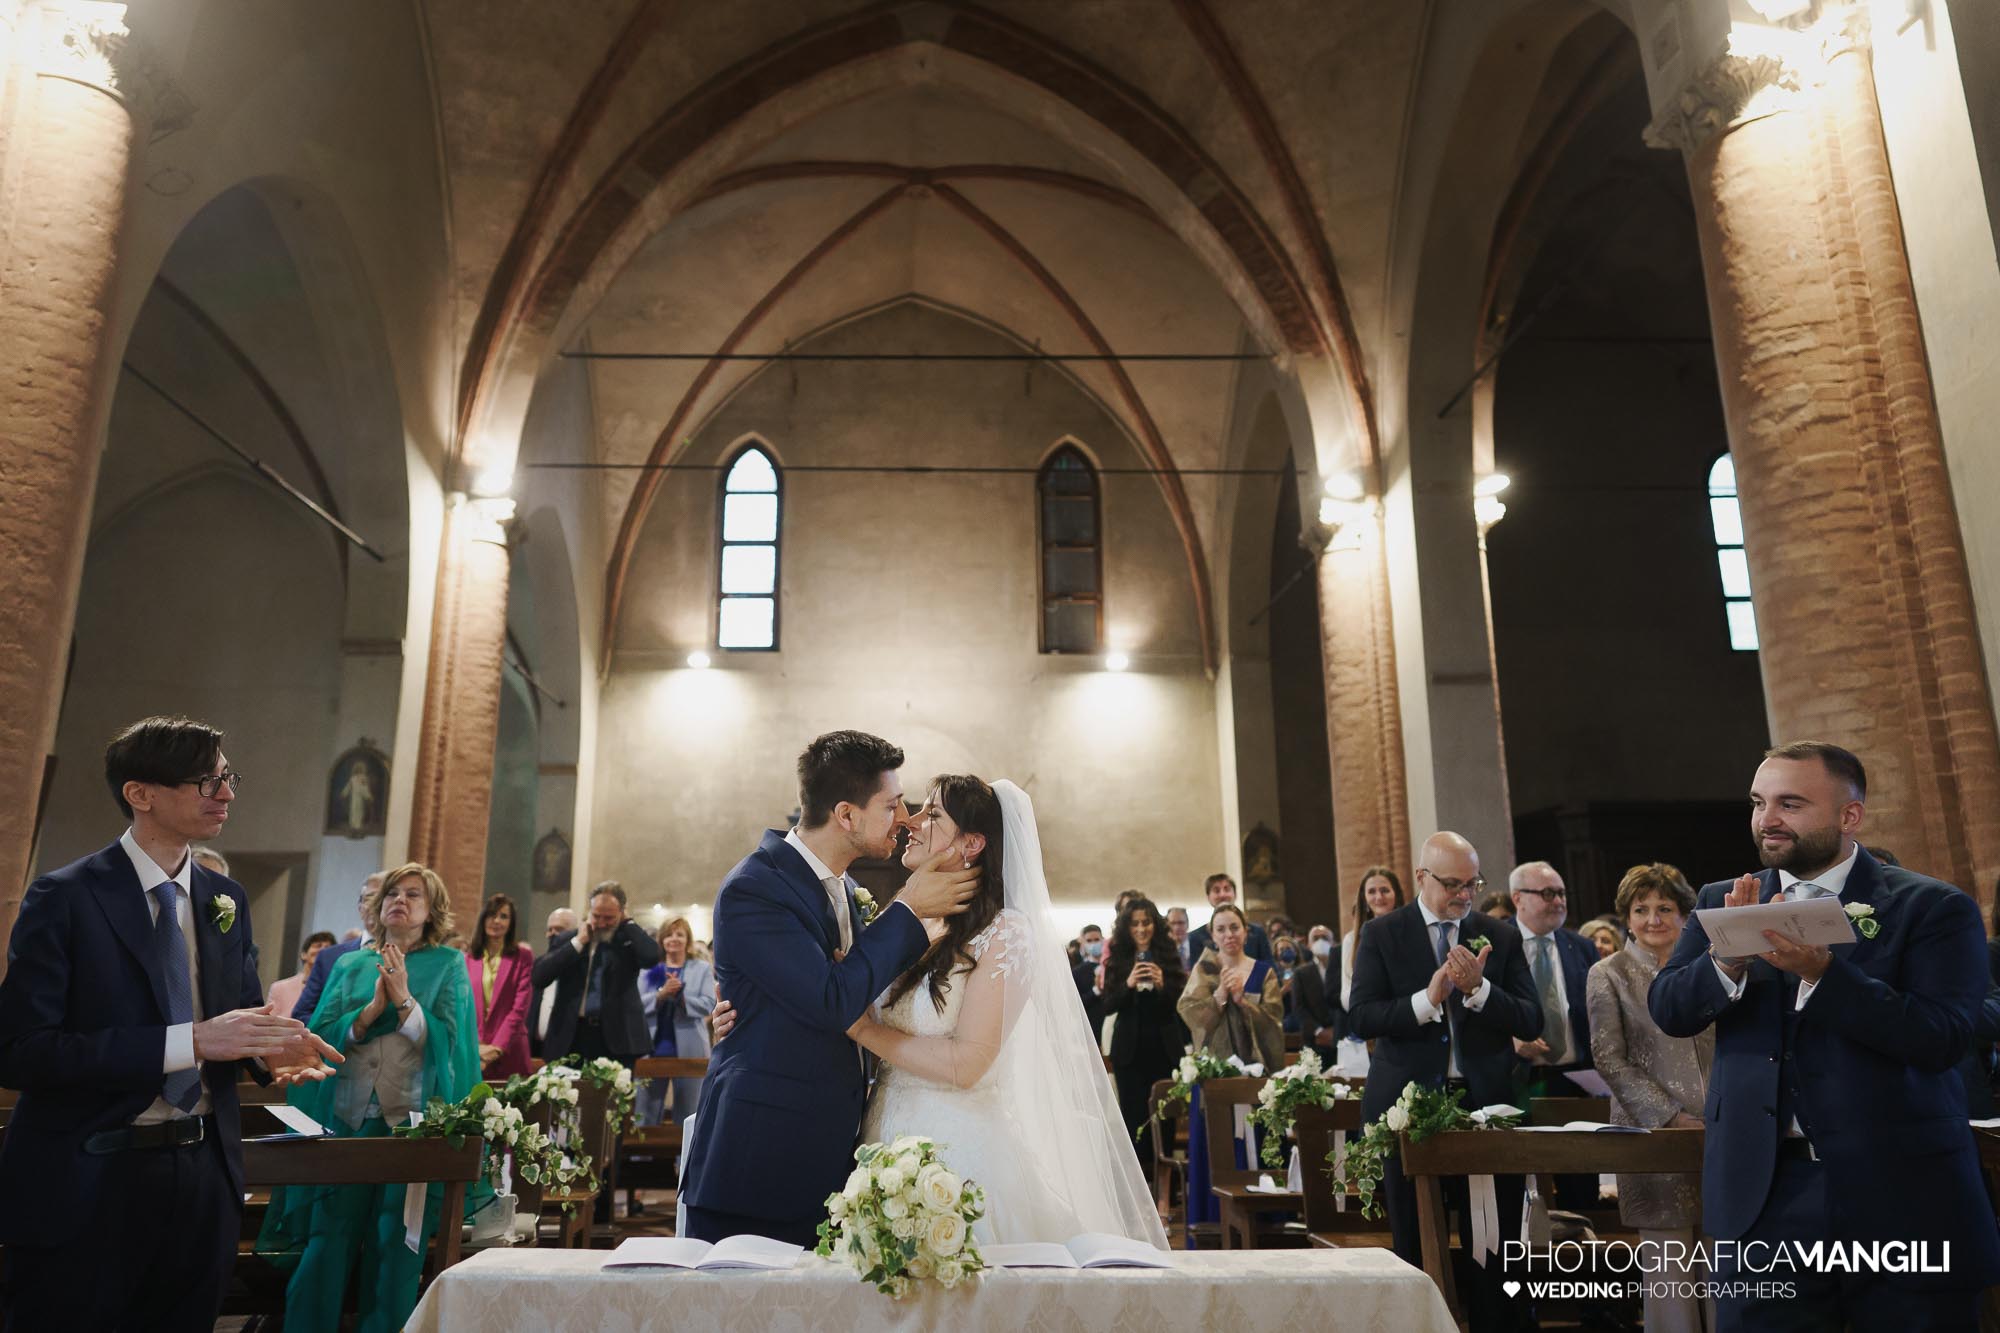 036 foto nozze wedding reportage sposi bacio rito religioso chiesa milano chiara oliviero